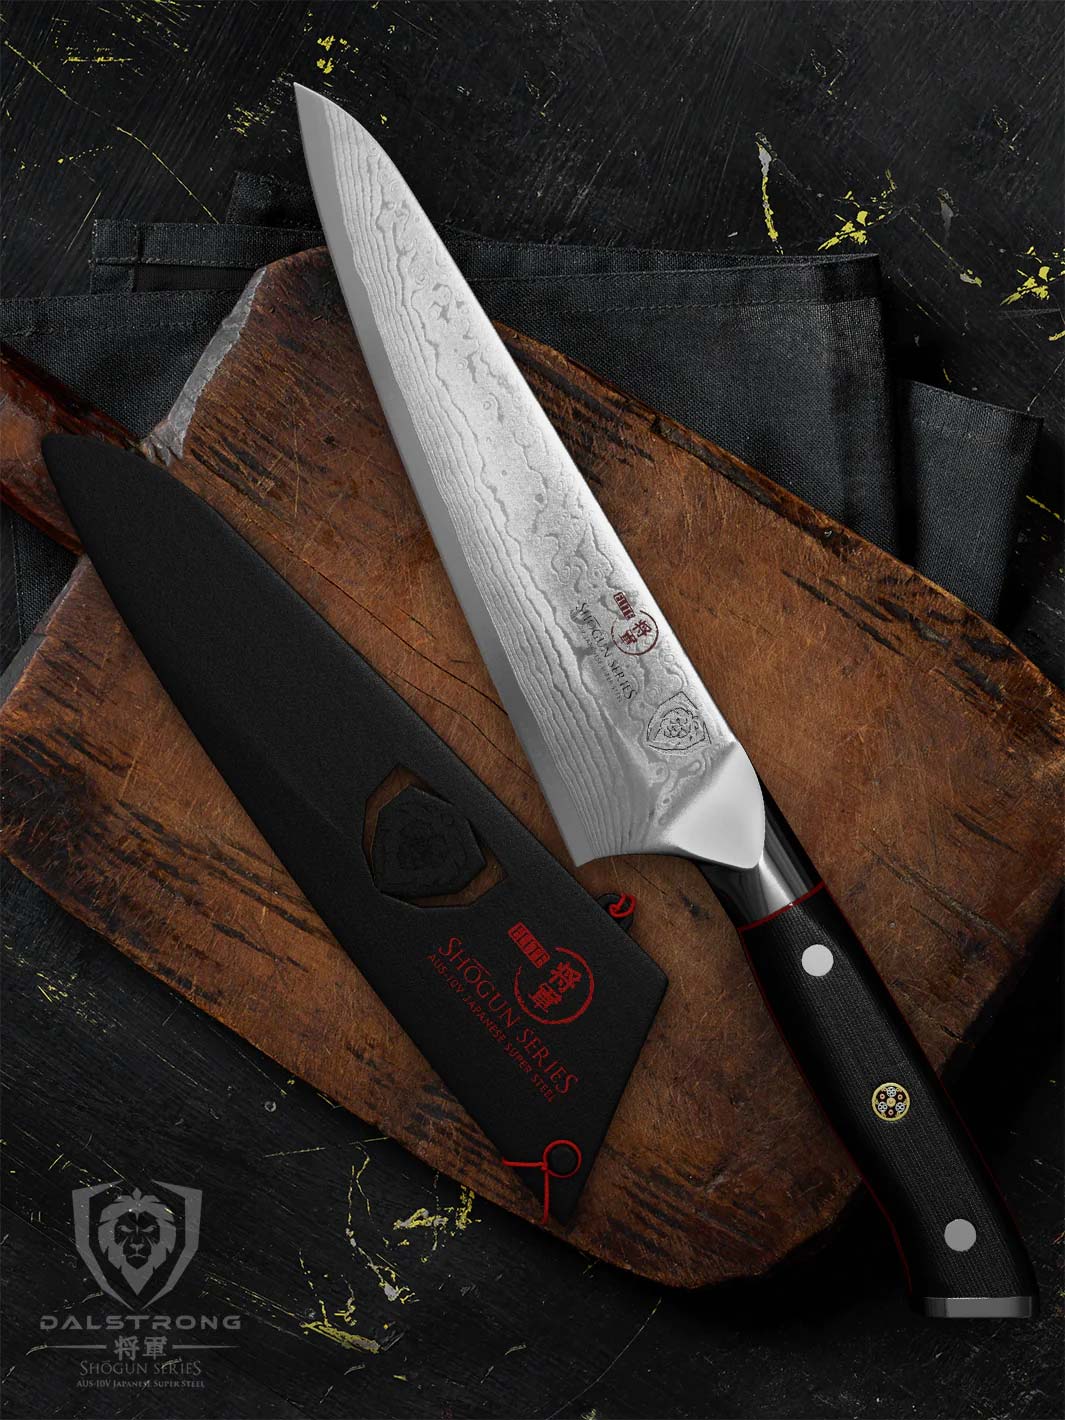 Santoku Knife 7 | Shogun Series ELITE | Dalstrong ©